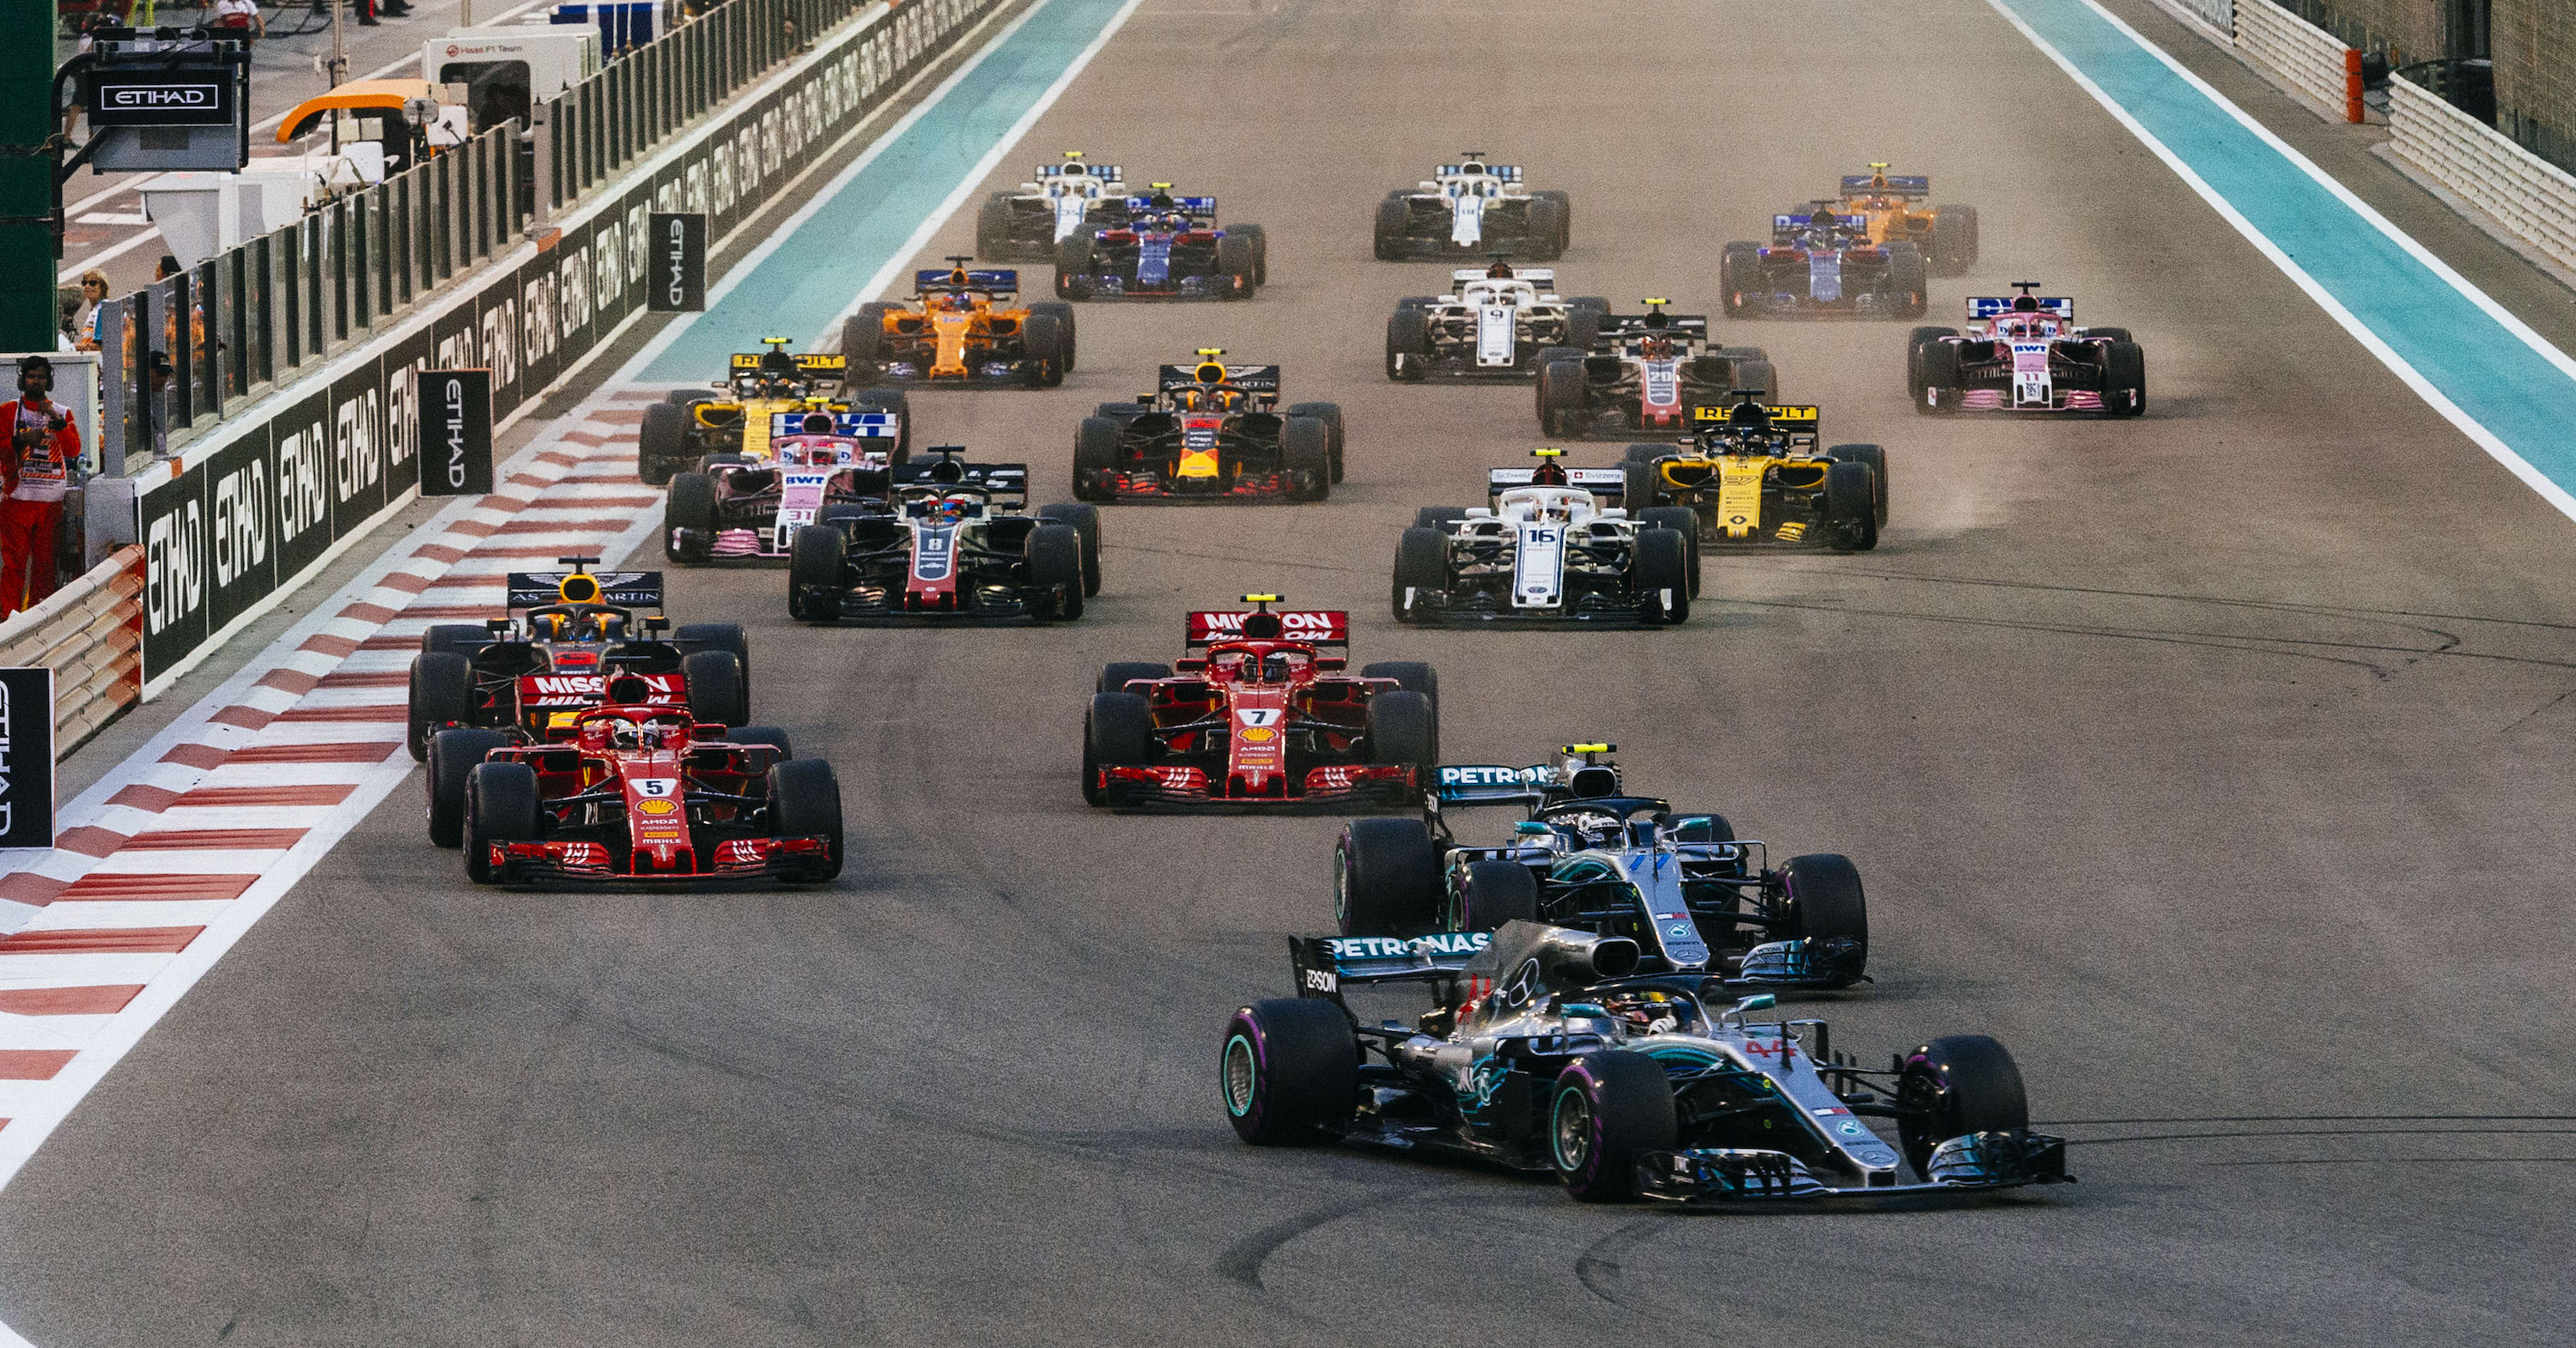 2018 Abu Dhabi Grand Prix